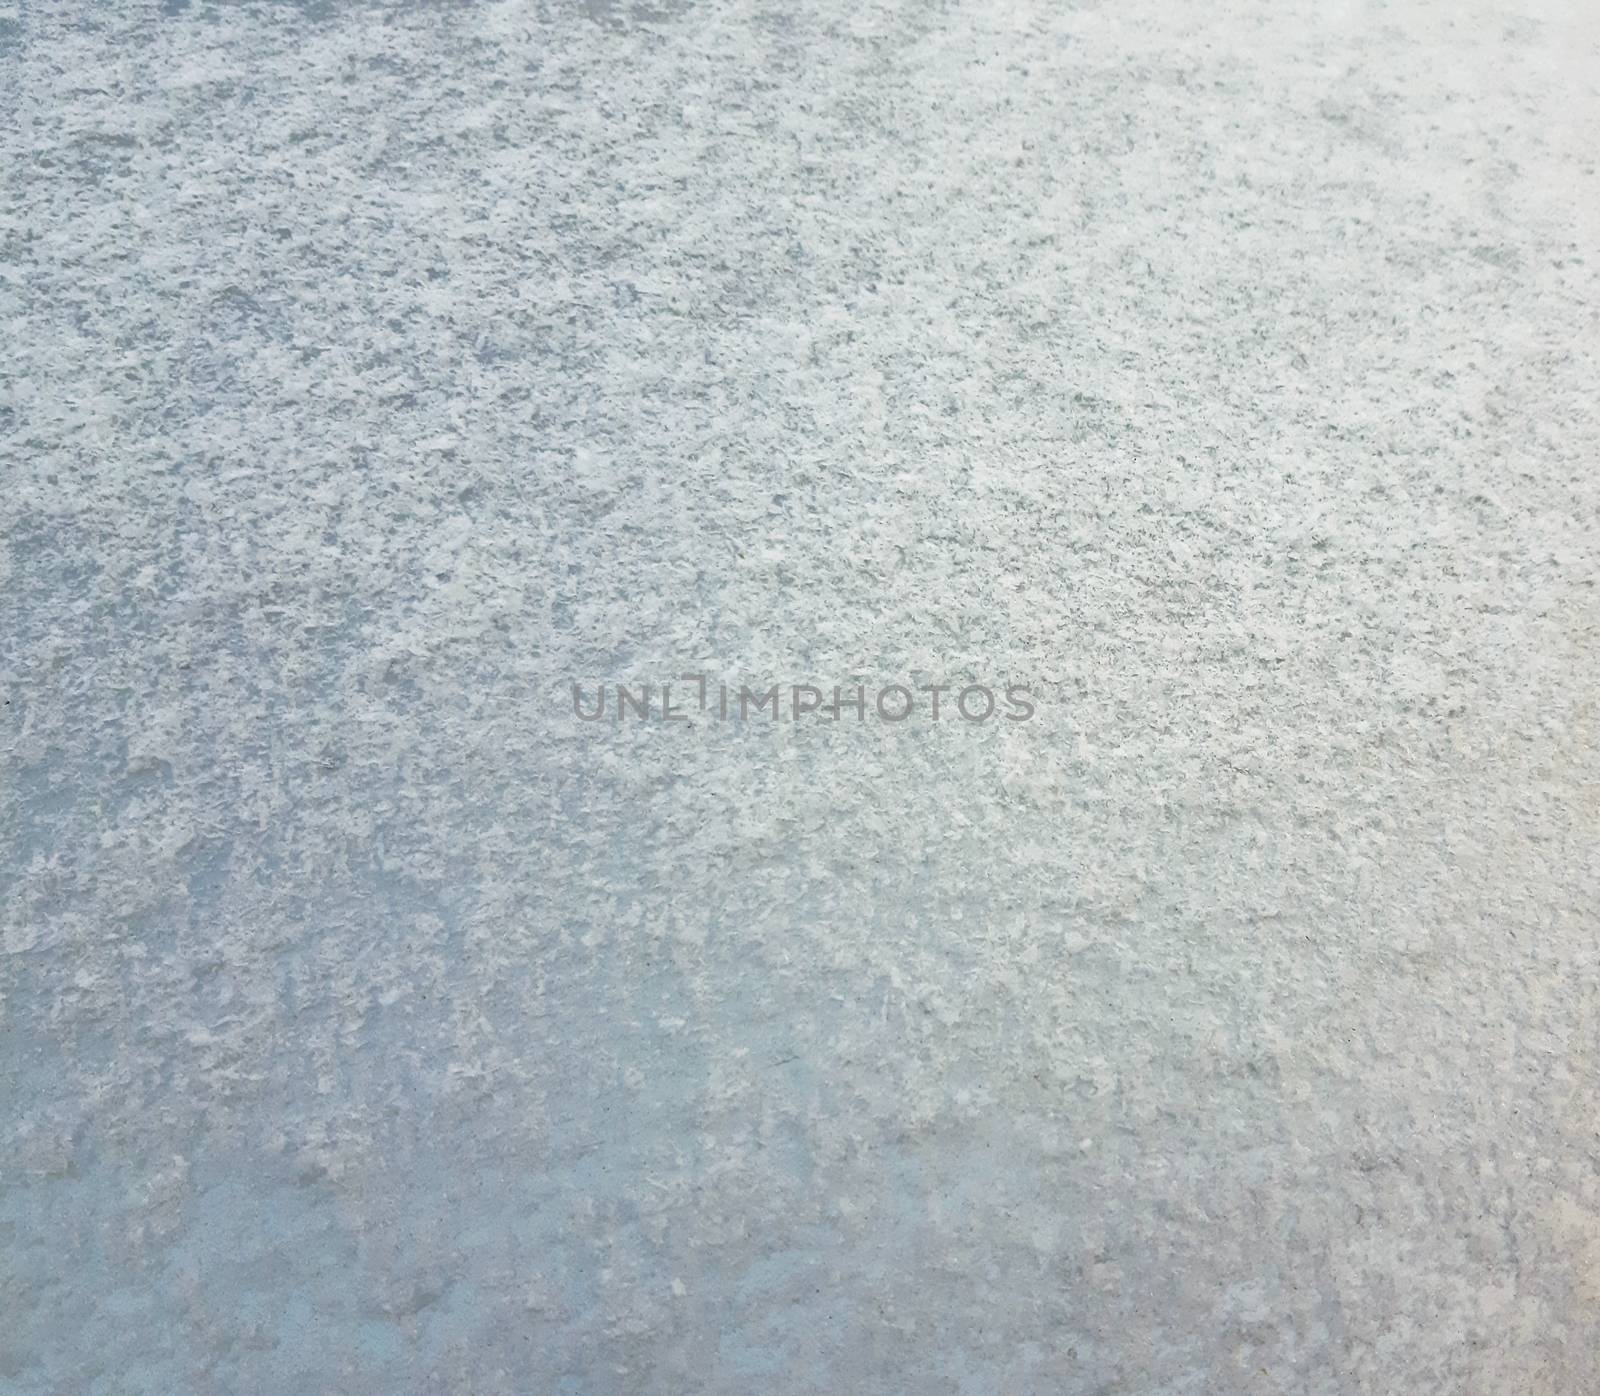 Snowy texture on the hood of a car.